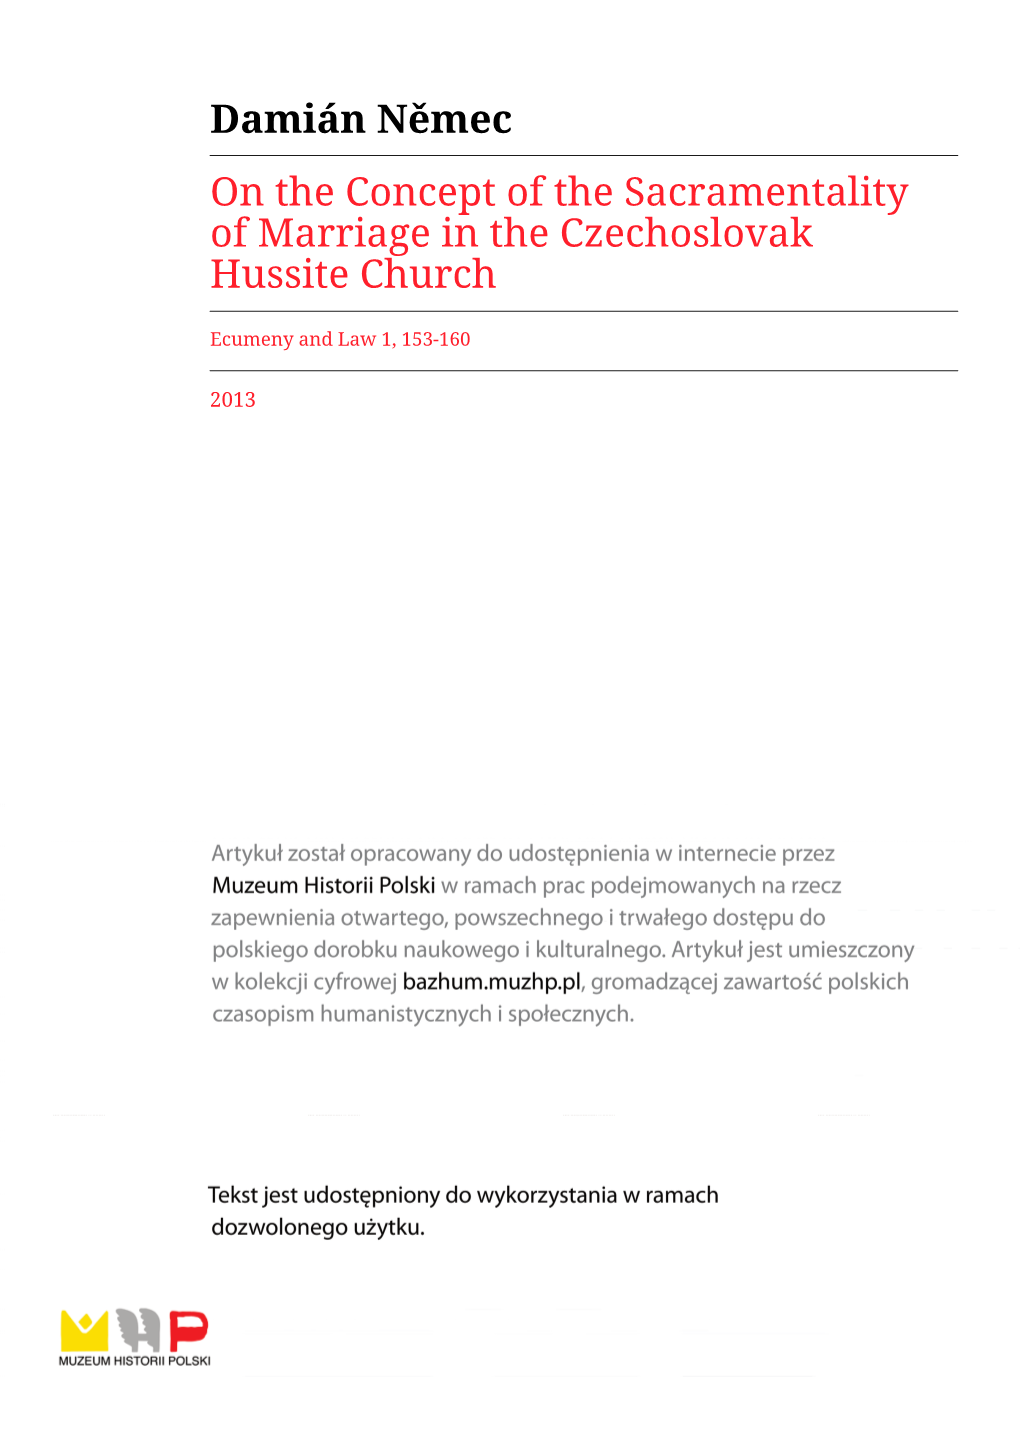 Damián Němec on the Concept of the Sacramentality of Marriage in the Czechoslovak Hussite Church